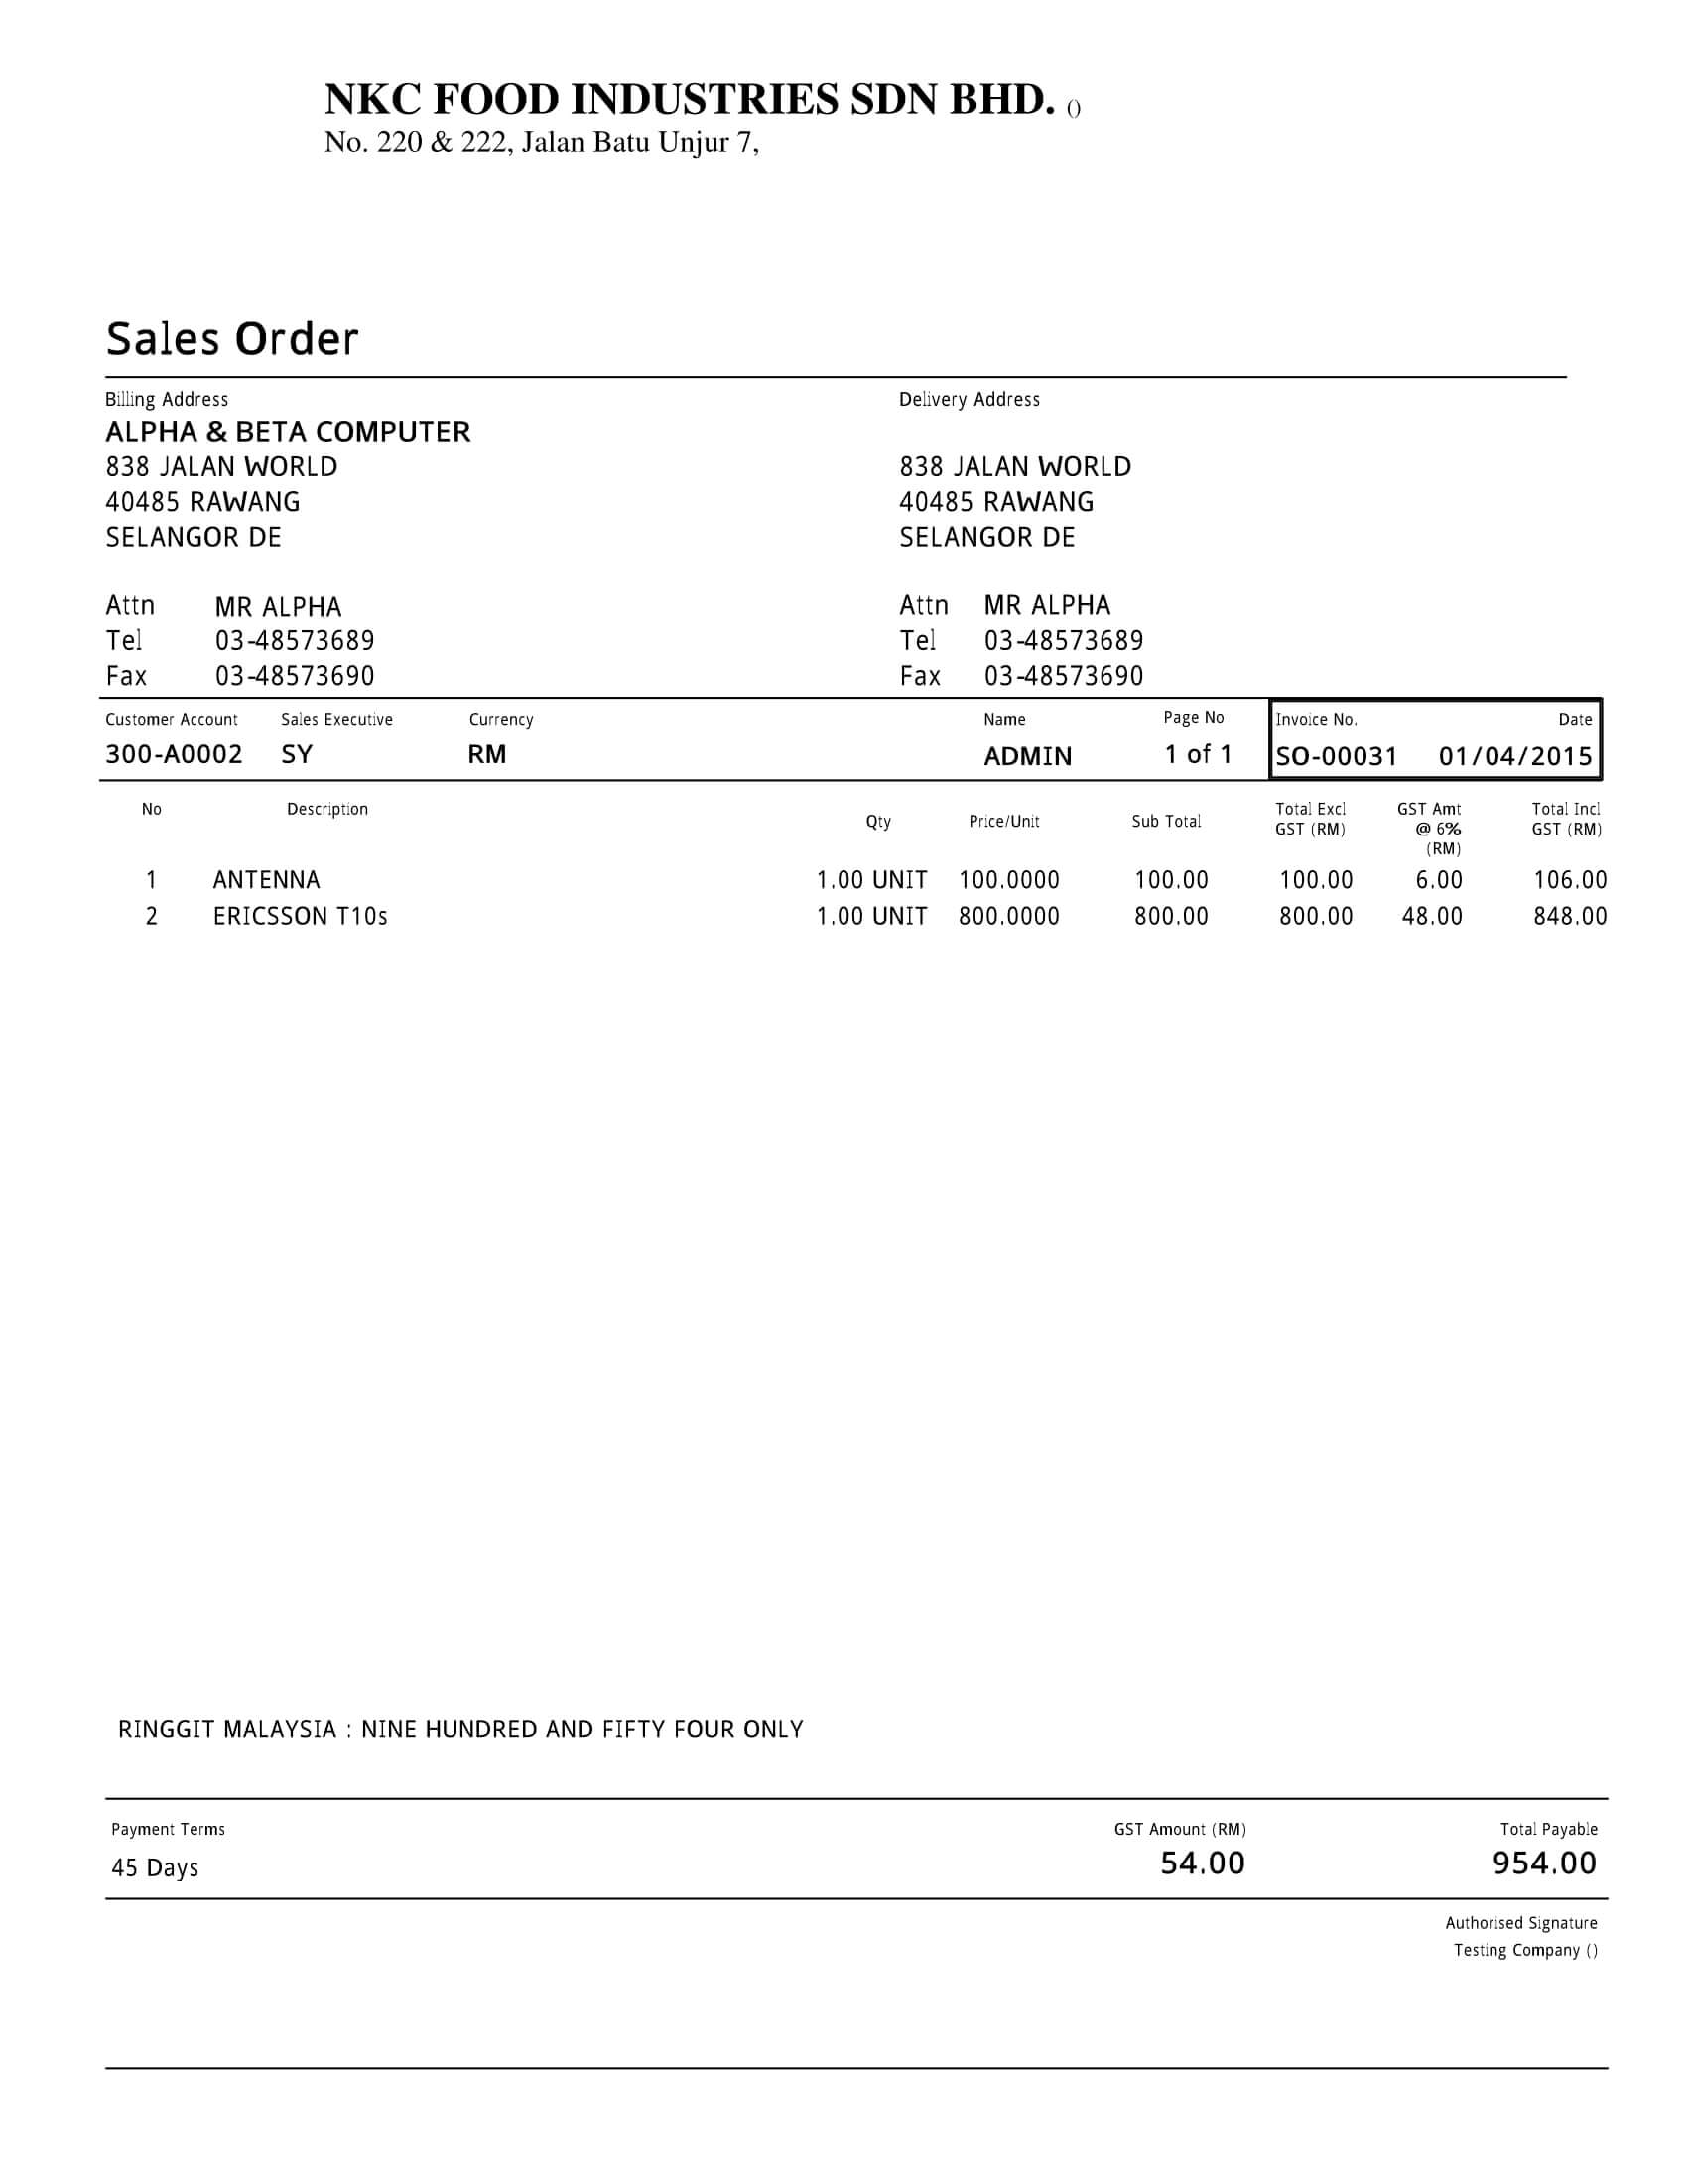 Sales Order Tax - With Deposit